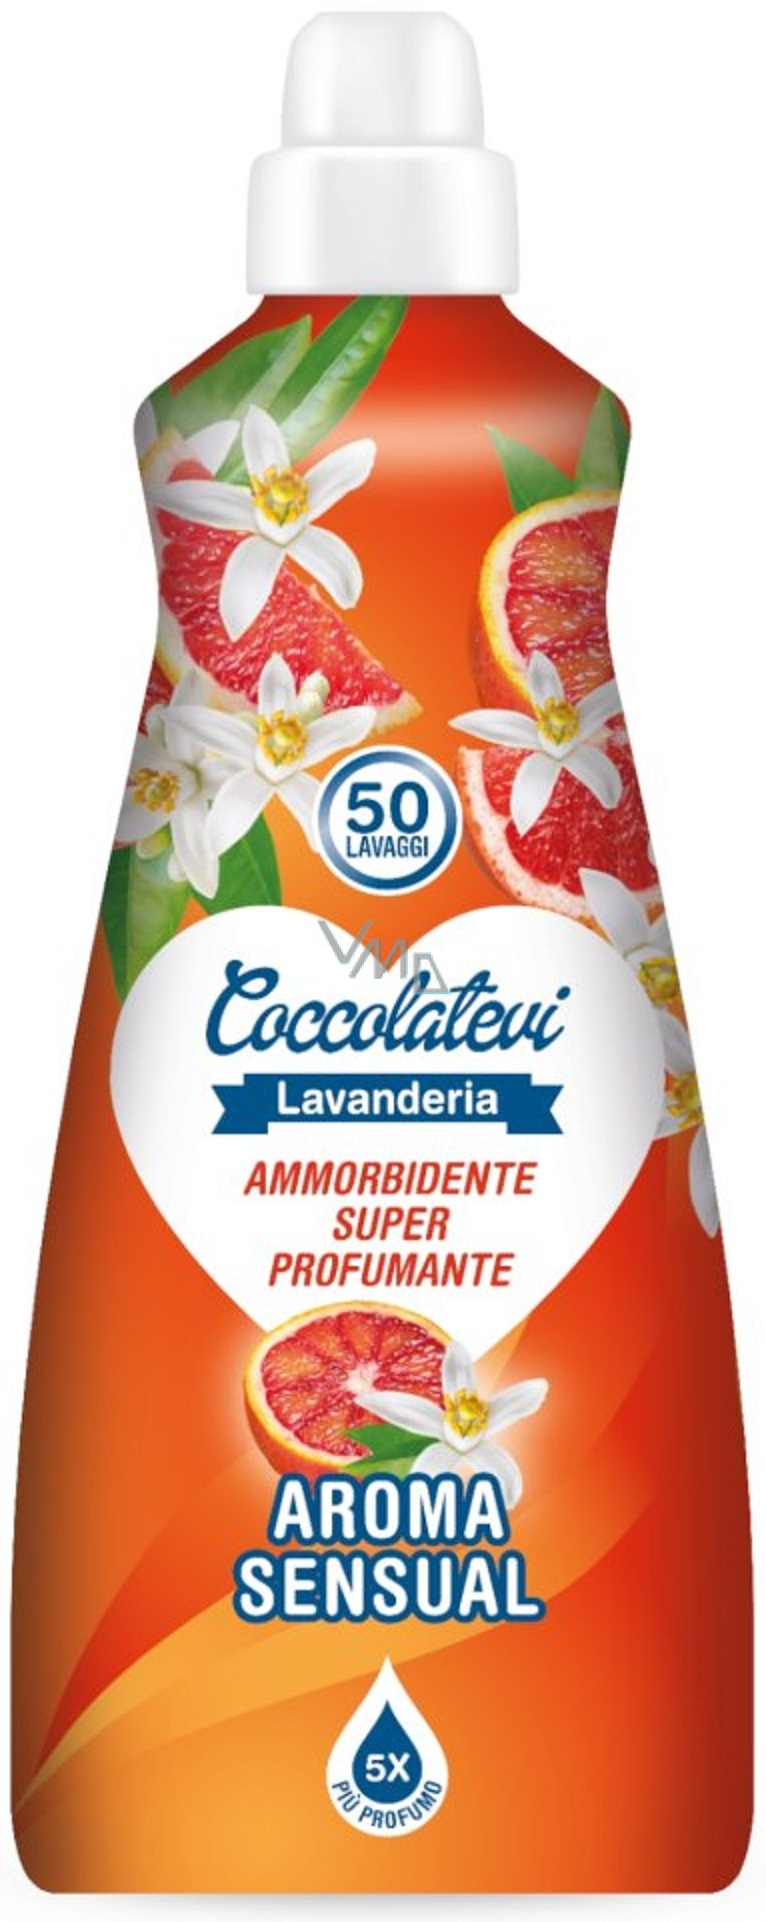 Coccolatevi Aroma Sensual fabric softener 50 doses 1250 ml - VMD parfumerie  - drogerie